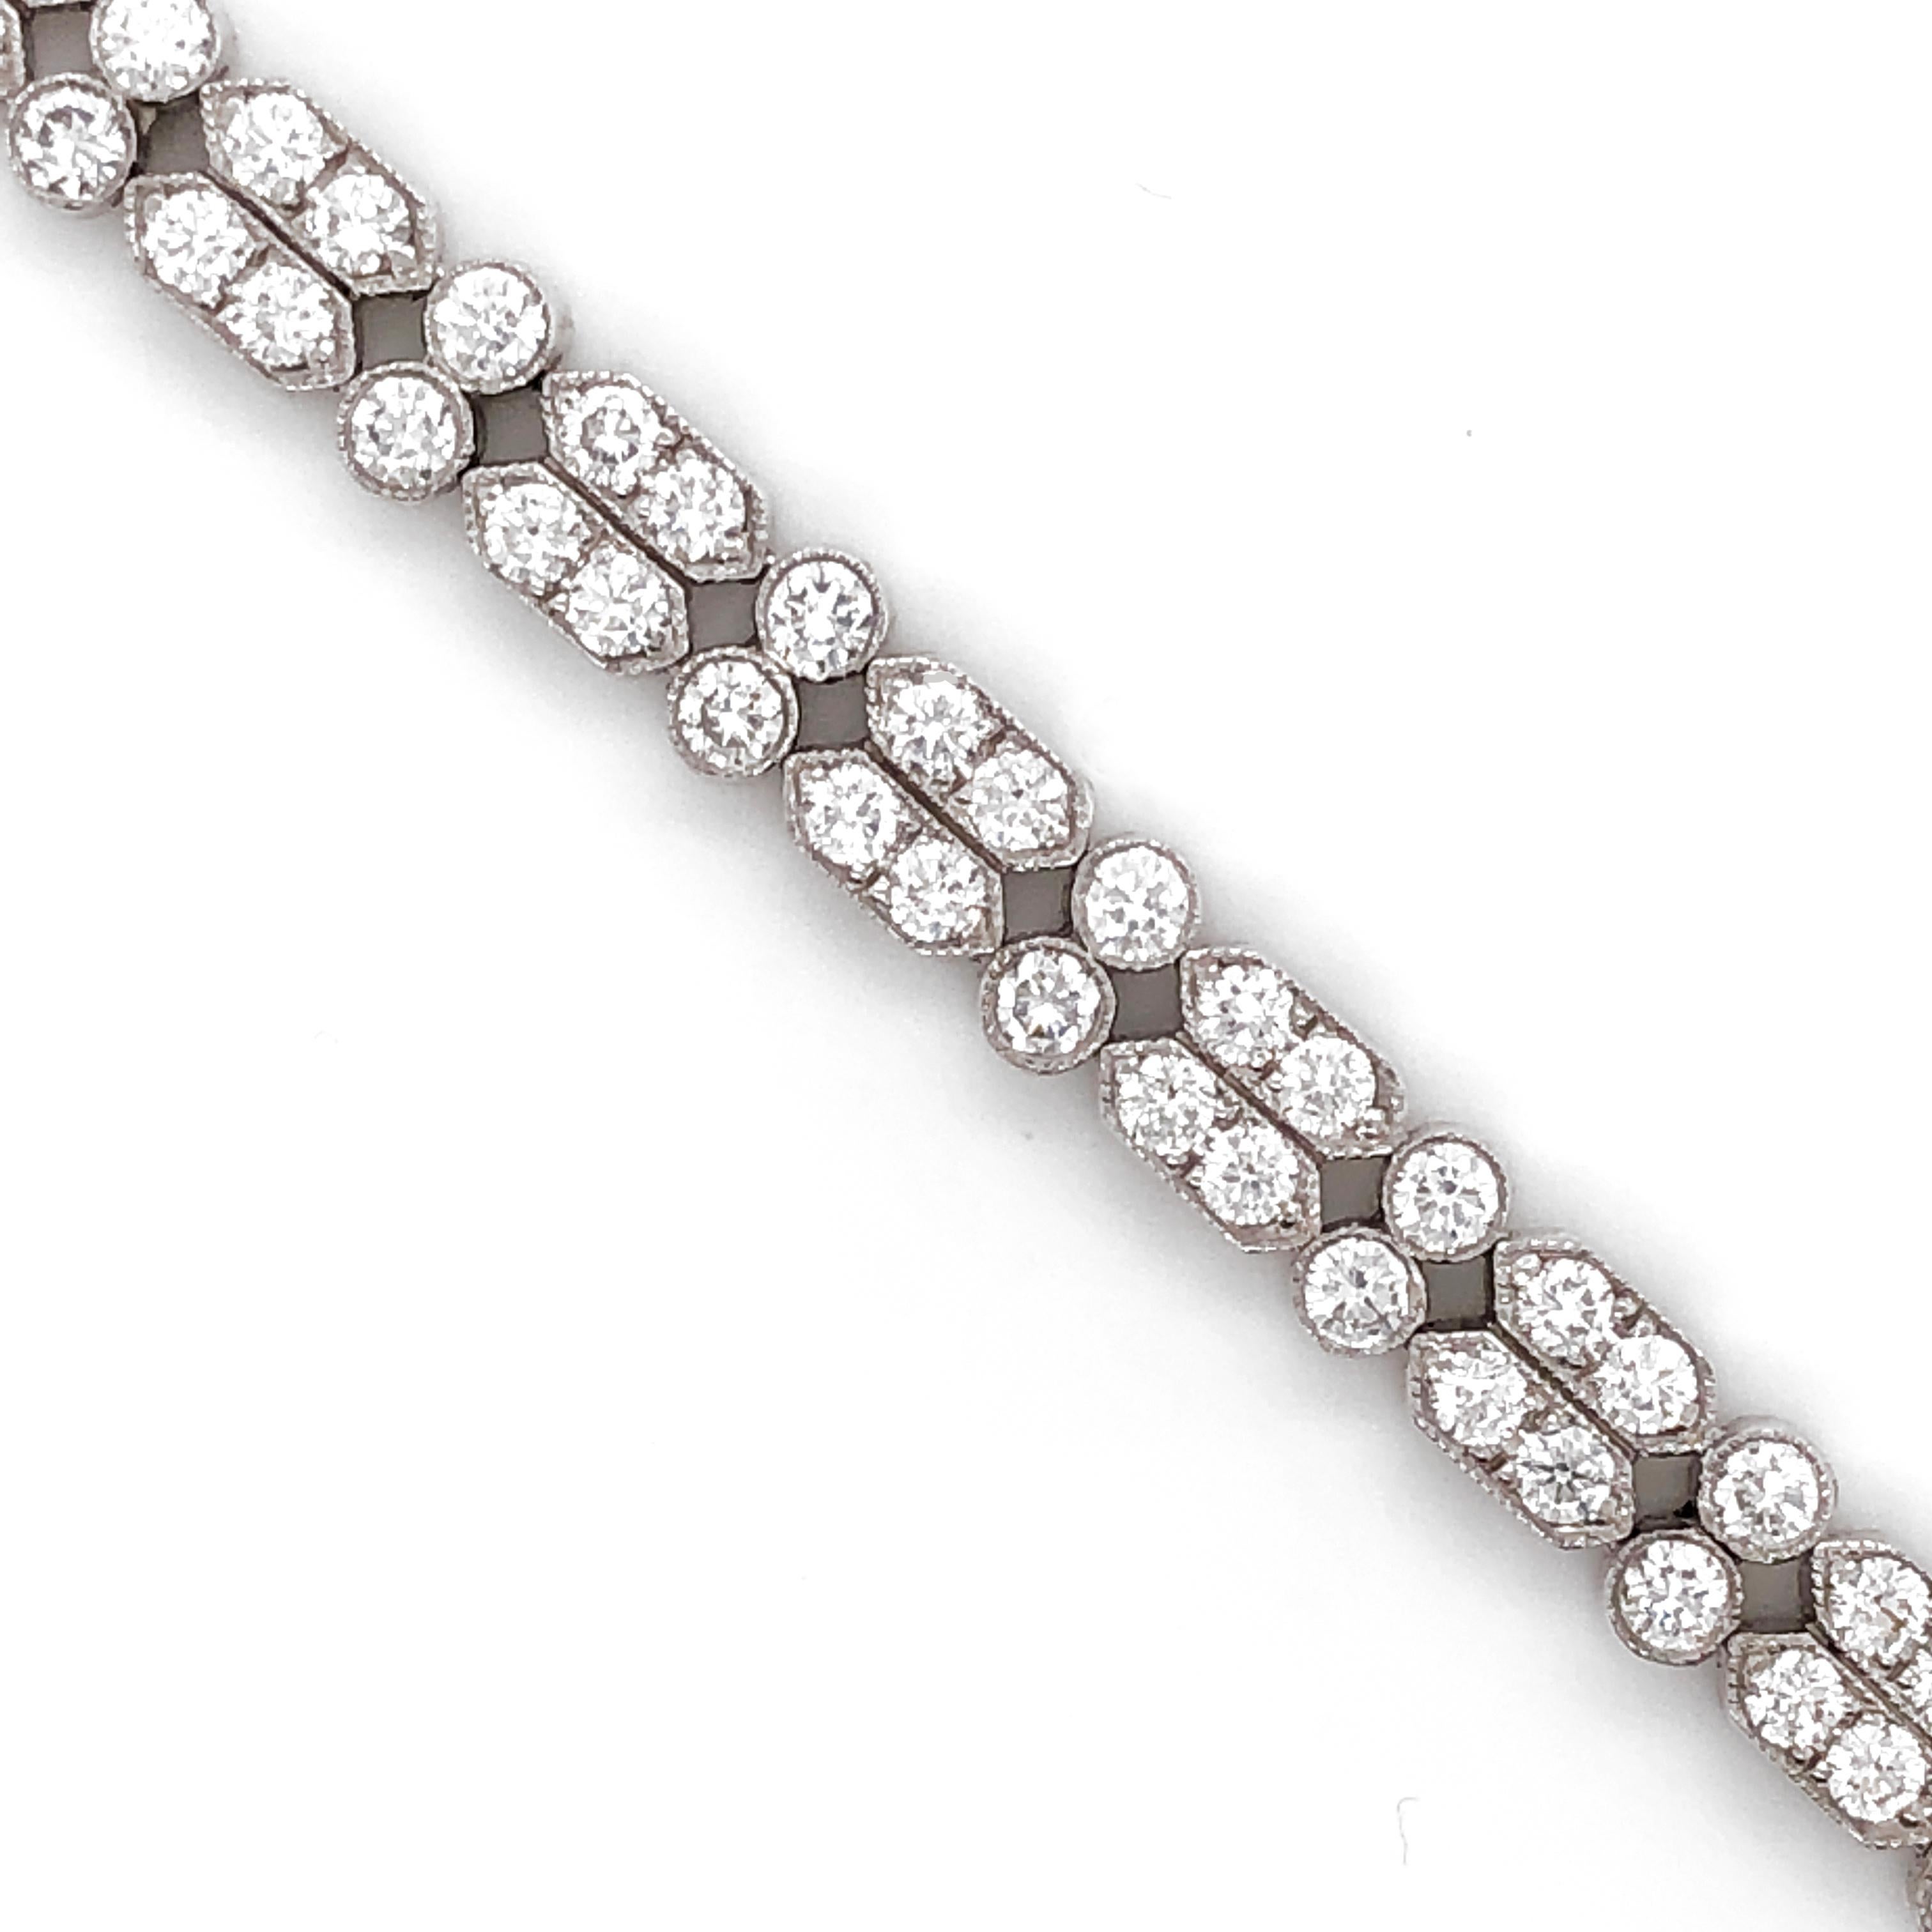 A very feminine, slim and elegant platinum 950 tennis bracelet.
White round natural diamonds 6.73 ct.
Diamonds in G-H Color Clarity VS.   
Dual row contemporary design. 
Length: 18 cm
Width: 1.6 cm
Weight: 26 g